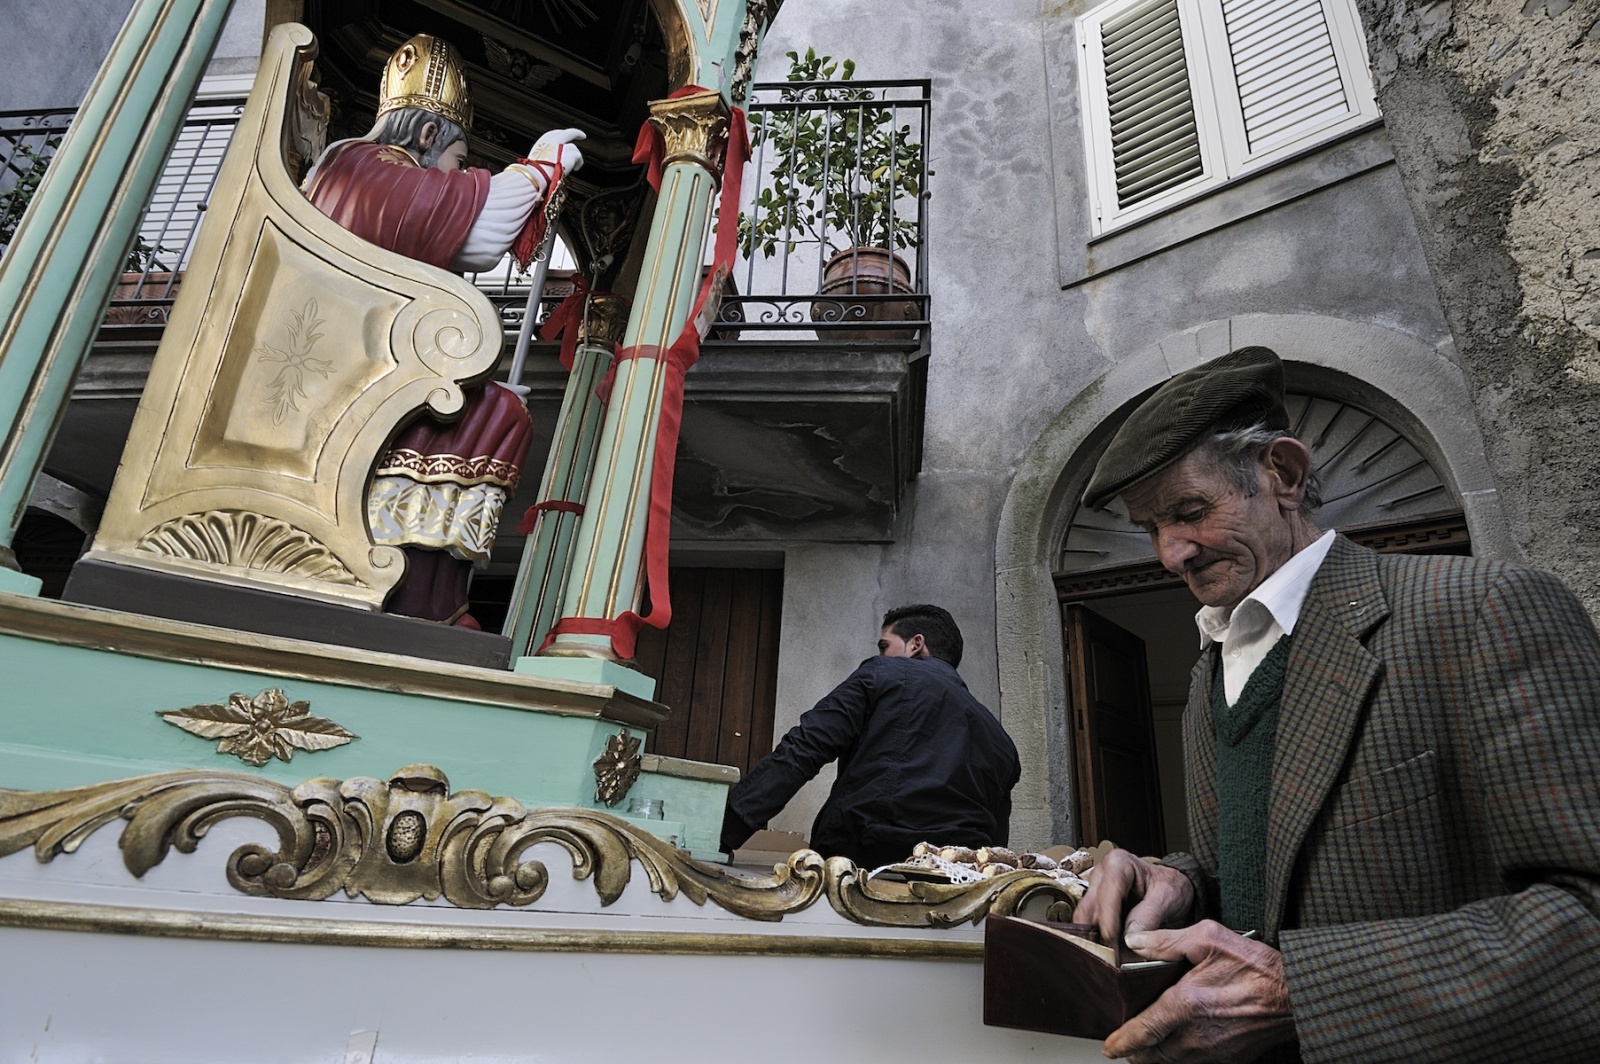 Festa di San Biagio - Motta Camastra (Messina)